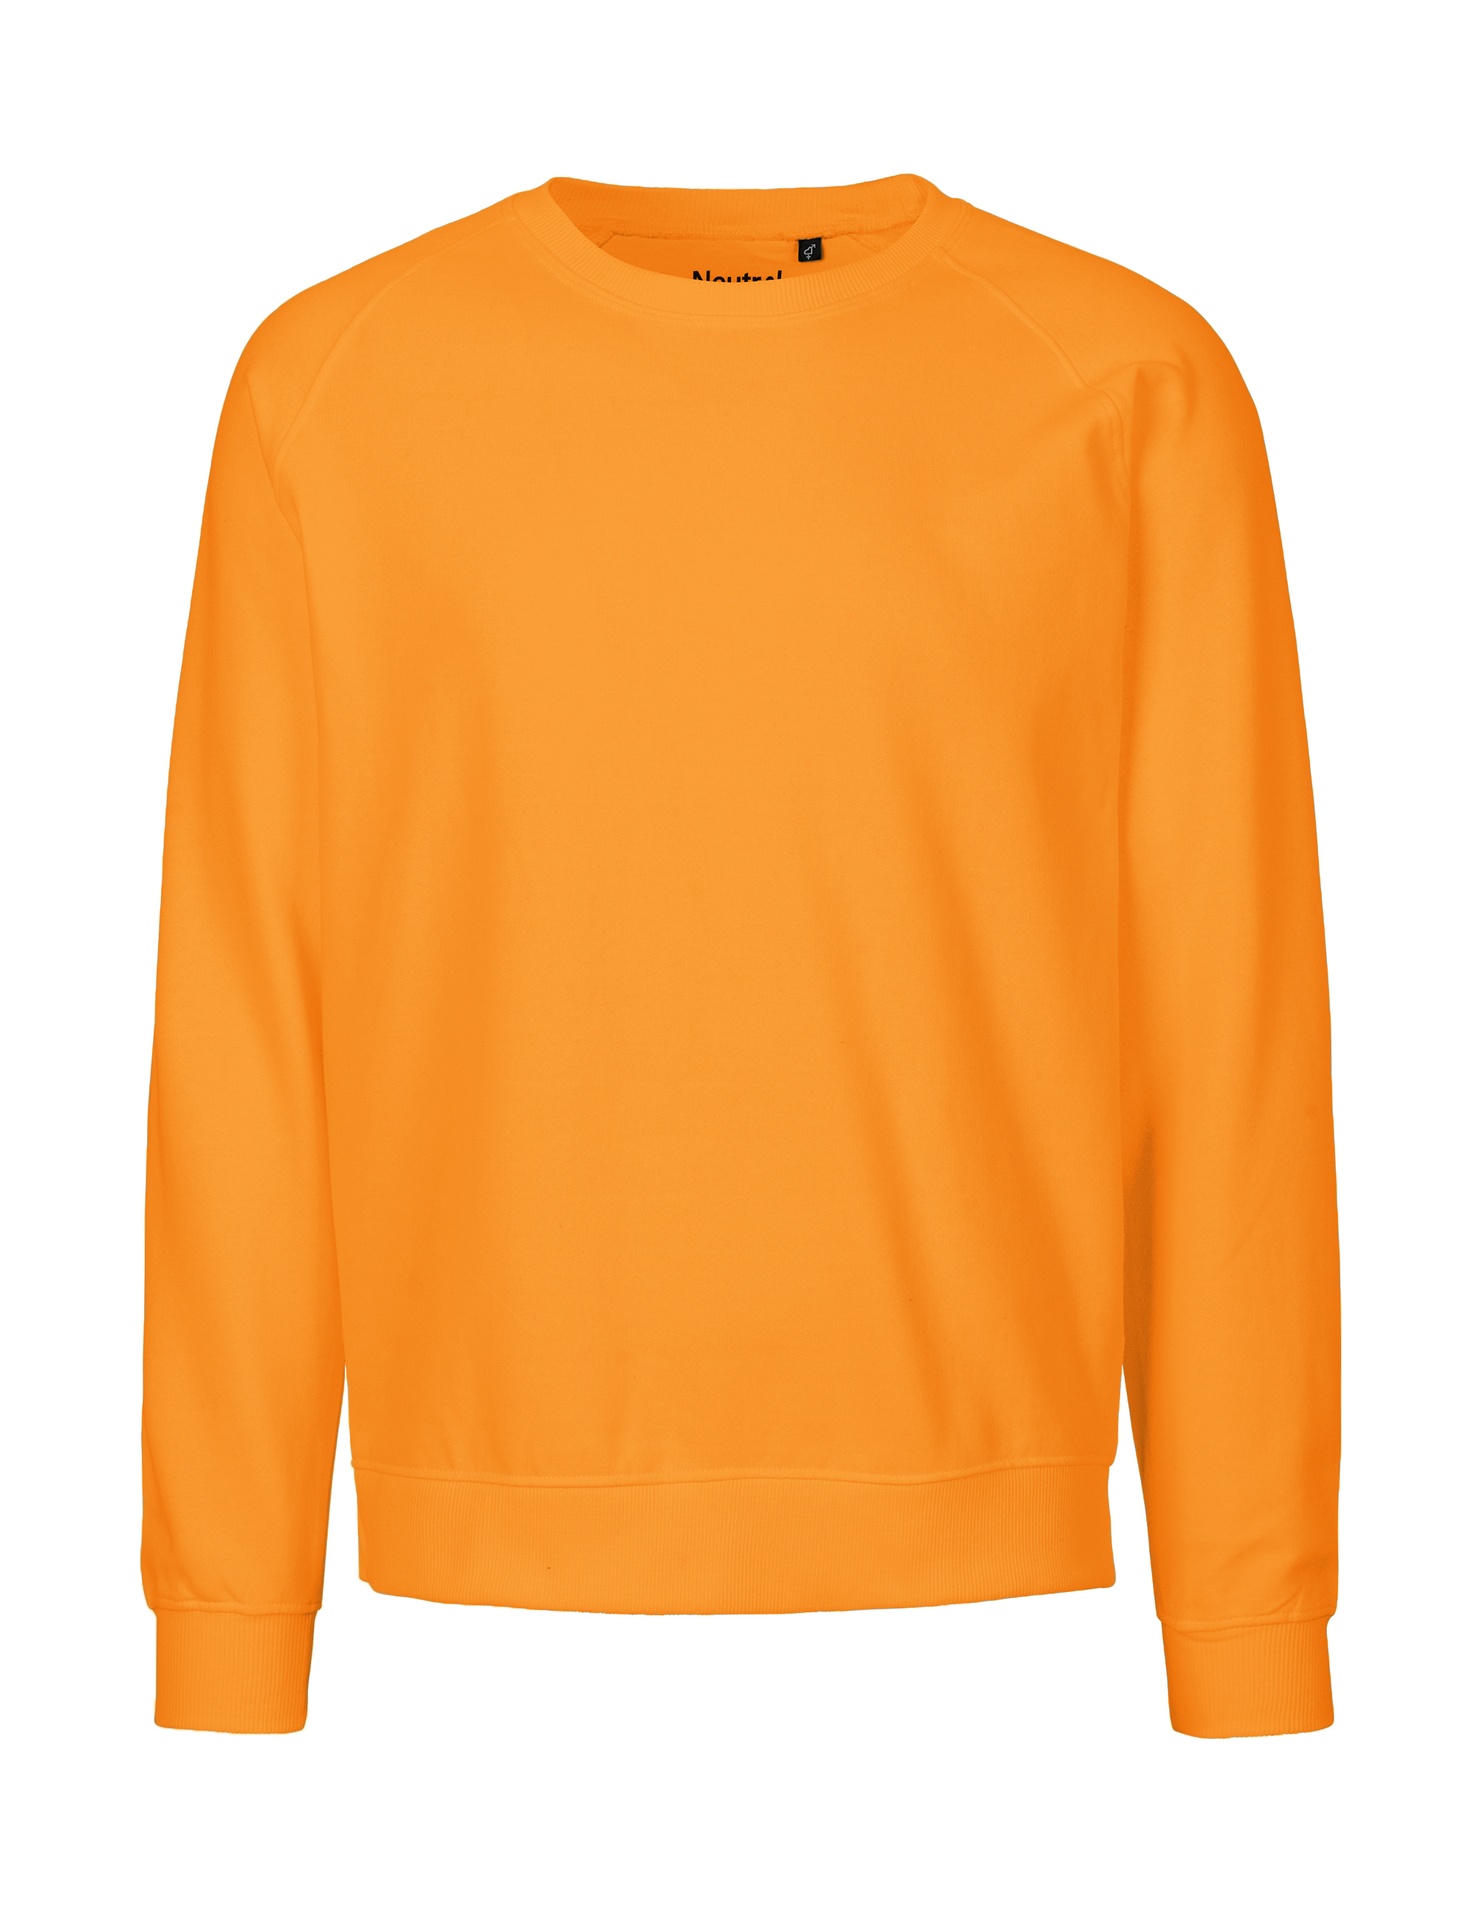 [PR/02790] Unisex Sweatshirt (Okay Orange 31, L)